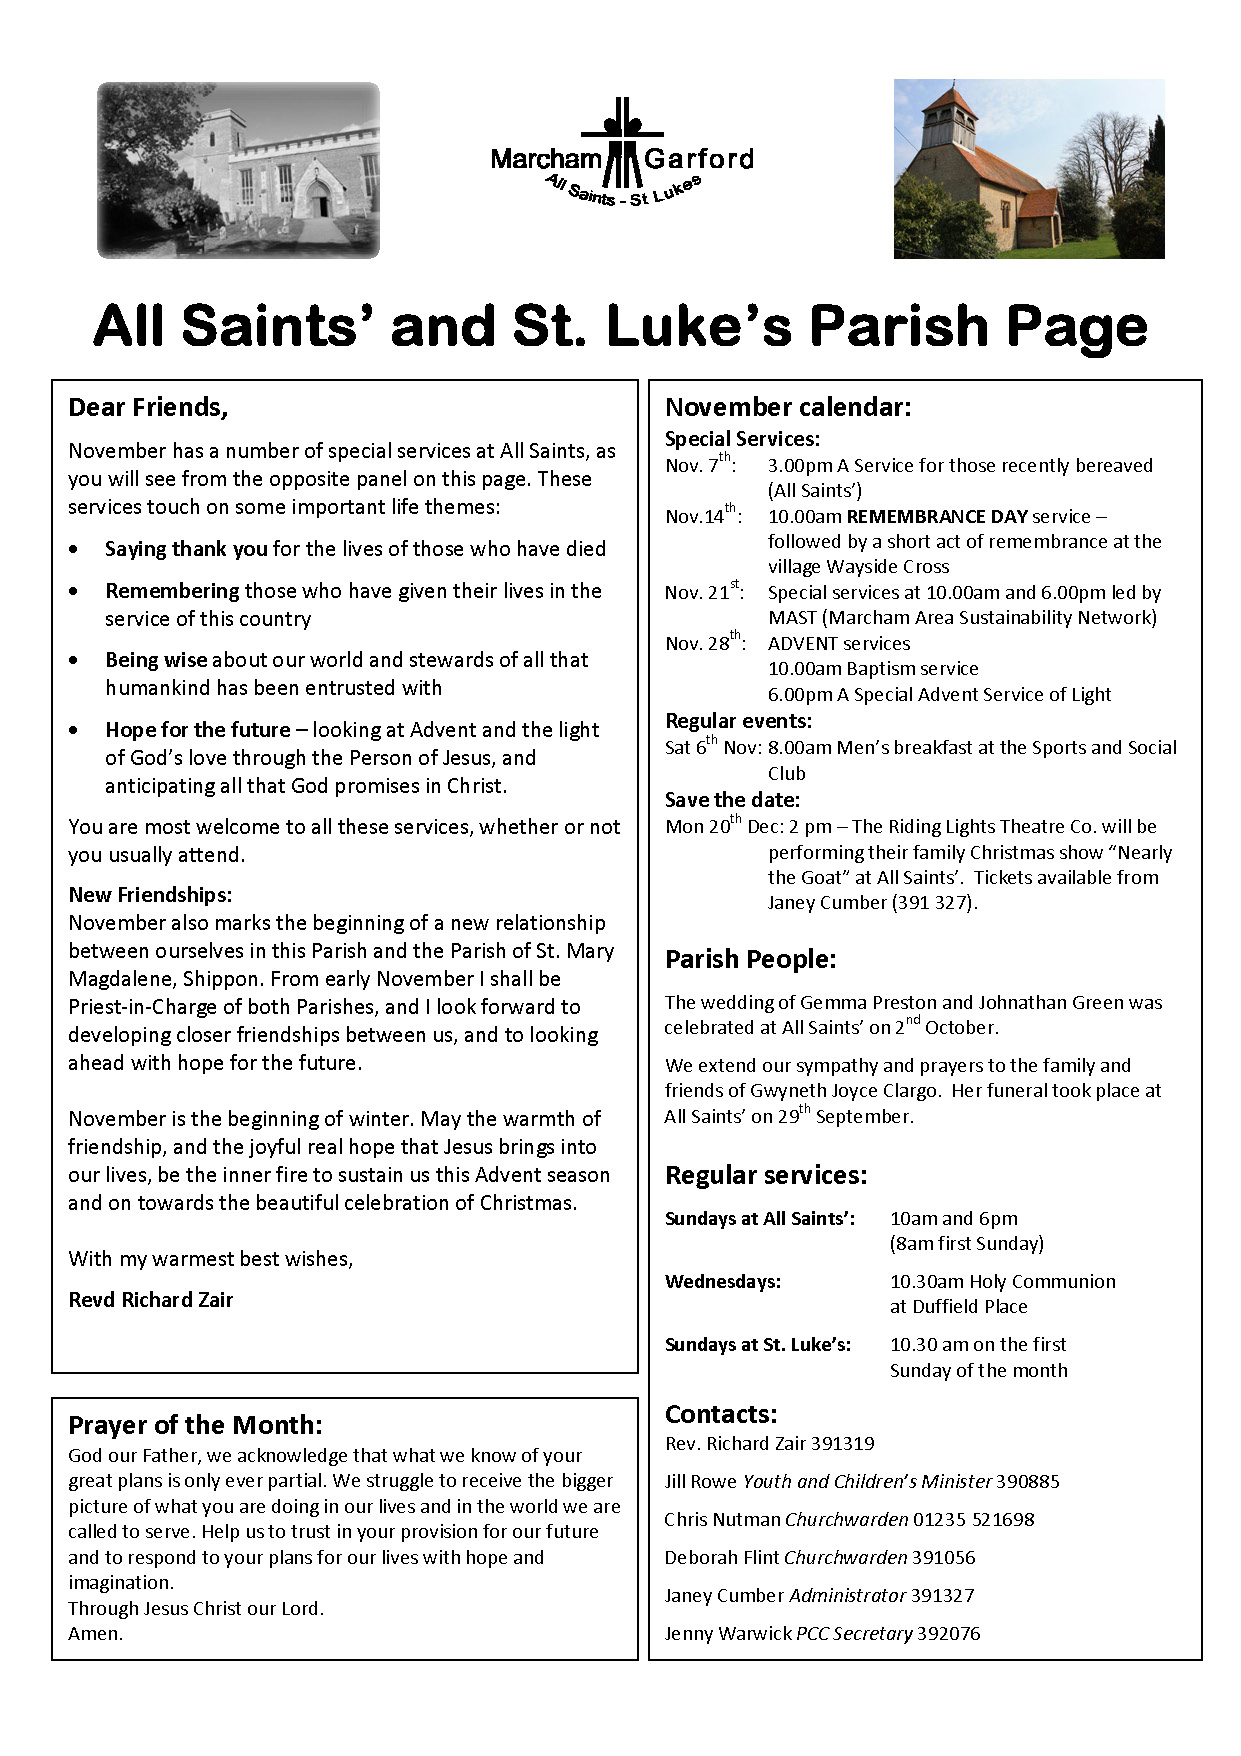 All Saints' & St Luke's Church page